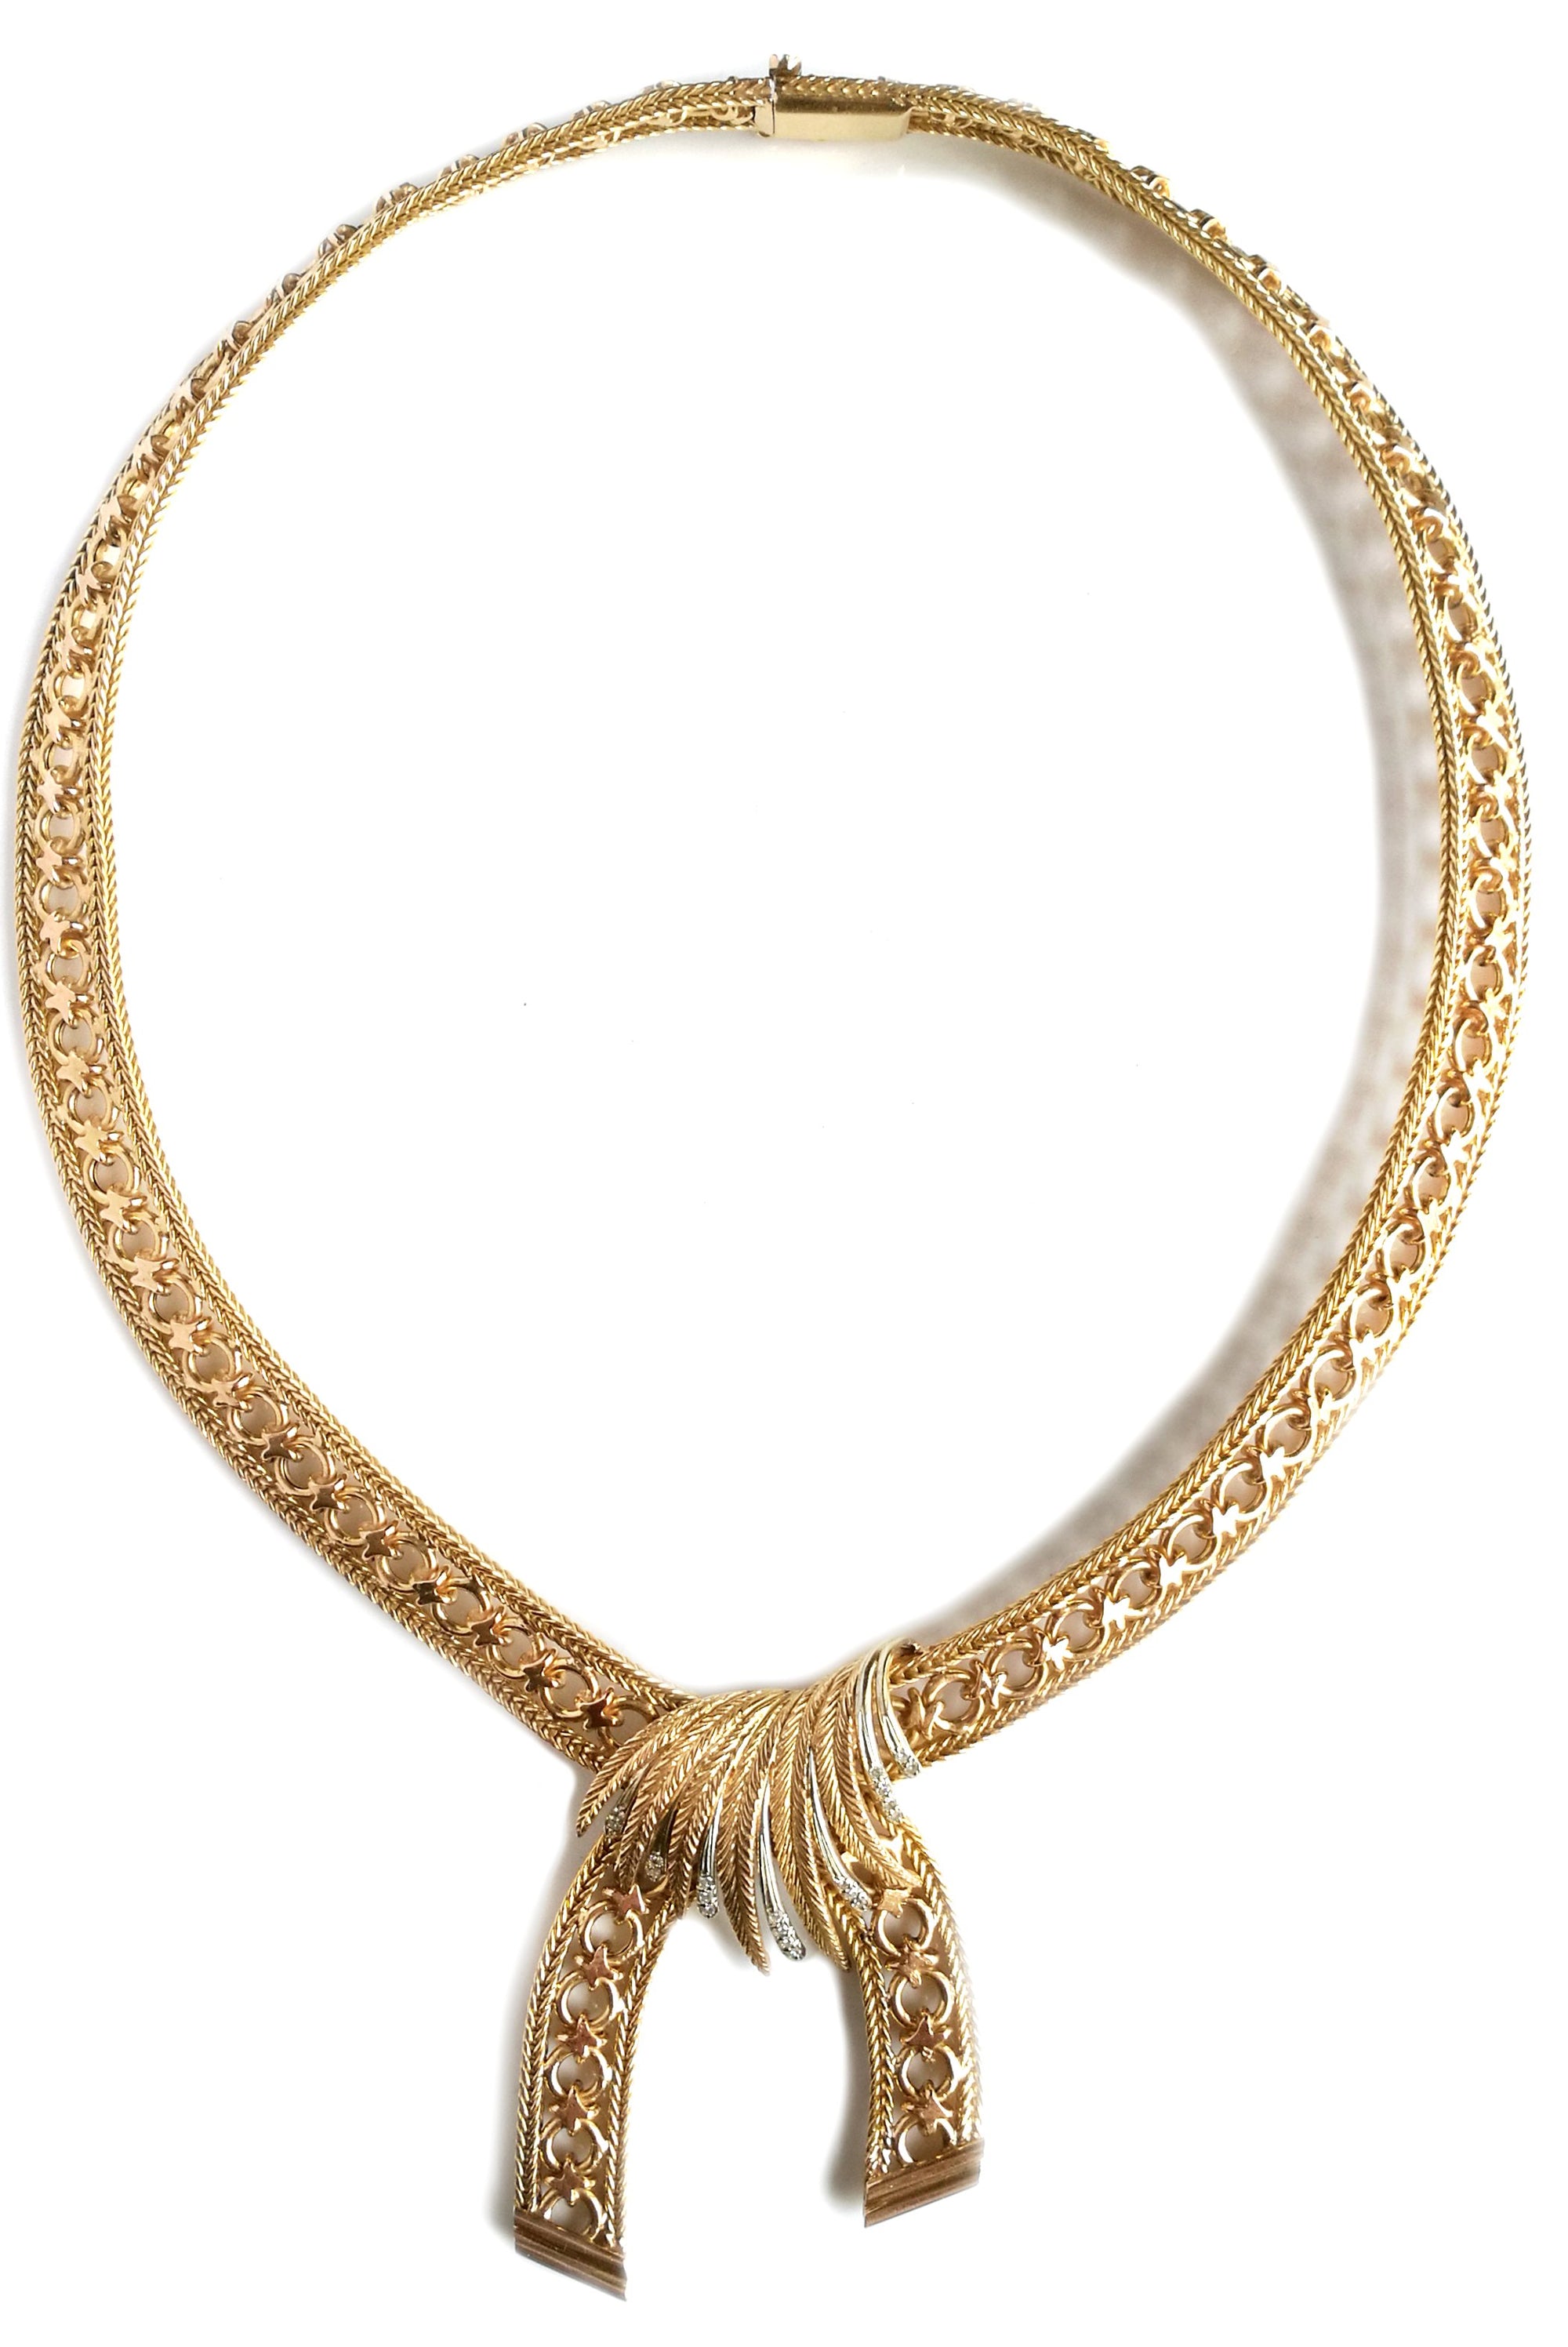 Vintage French 1940s Retro Gold Diamond Necklace